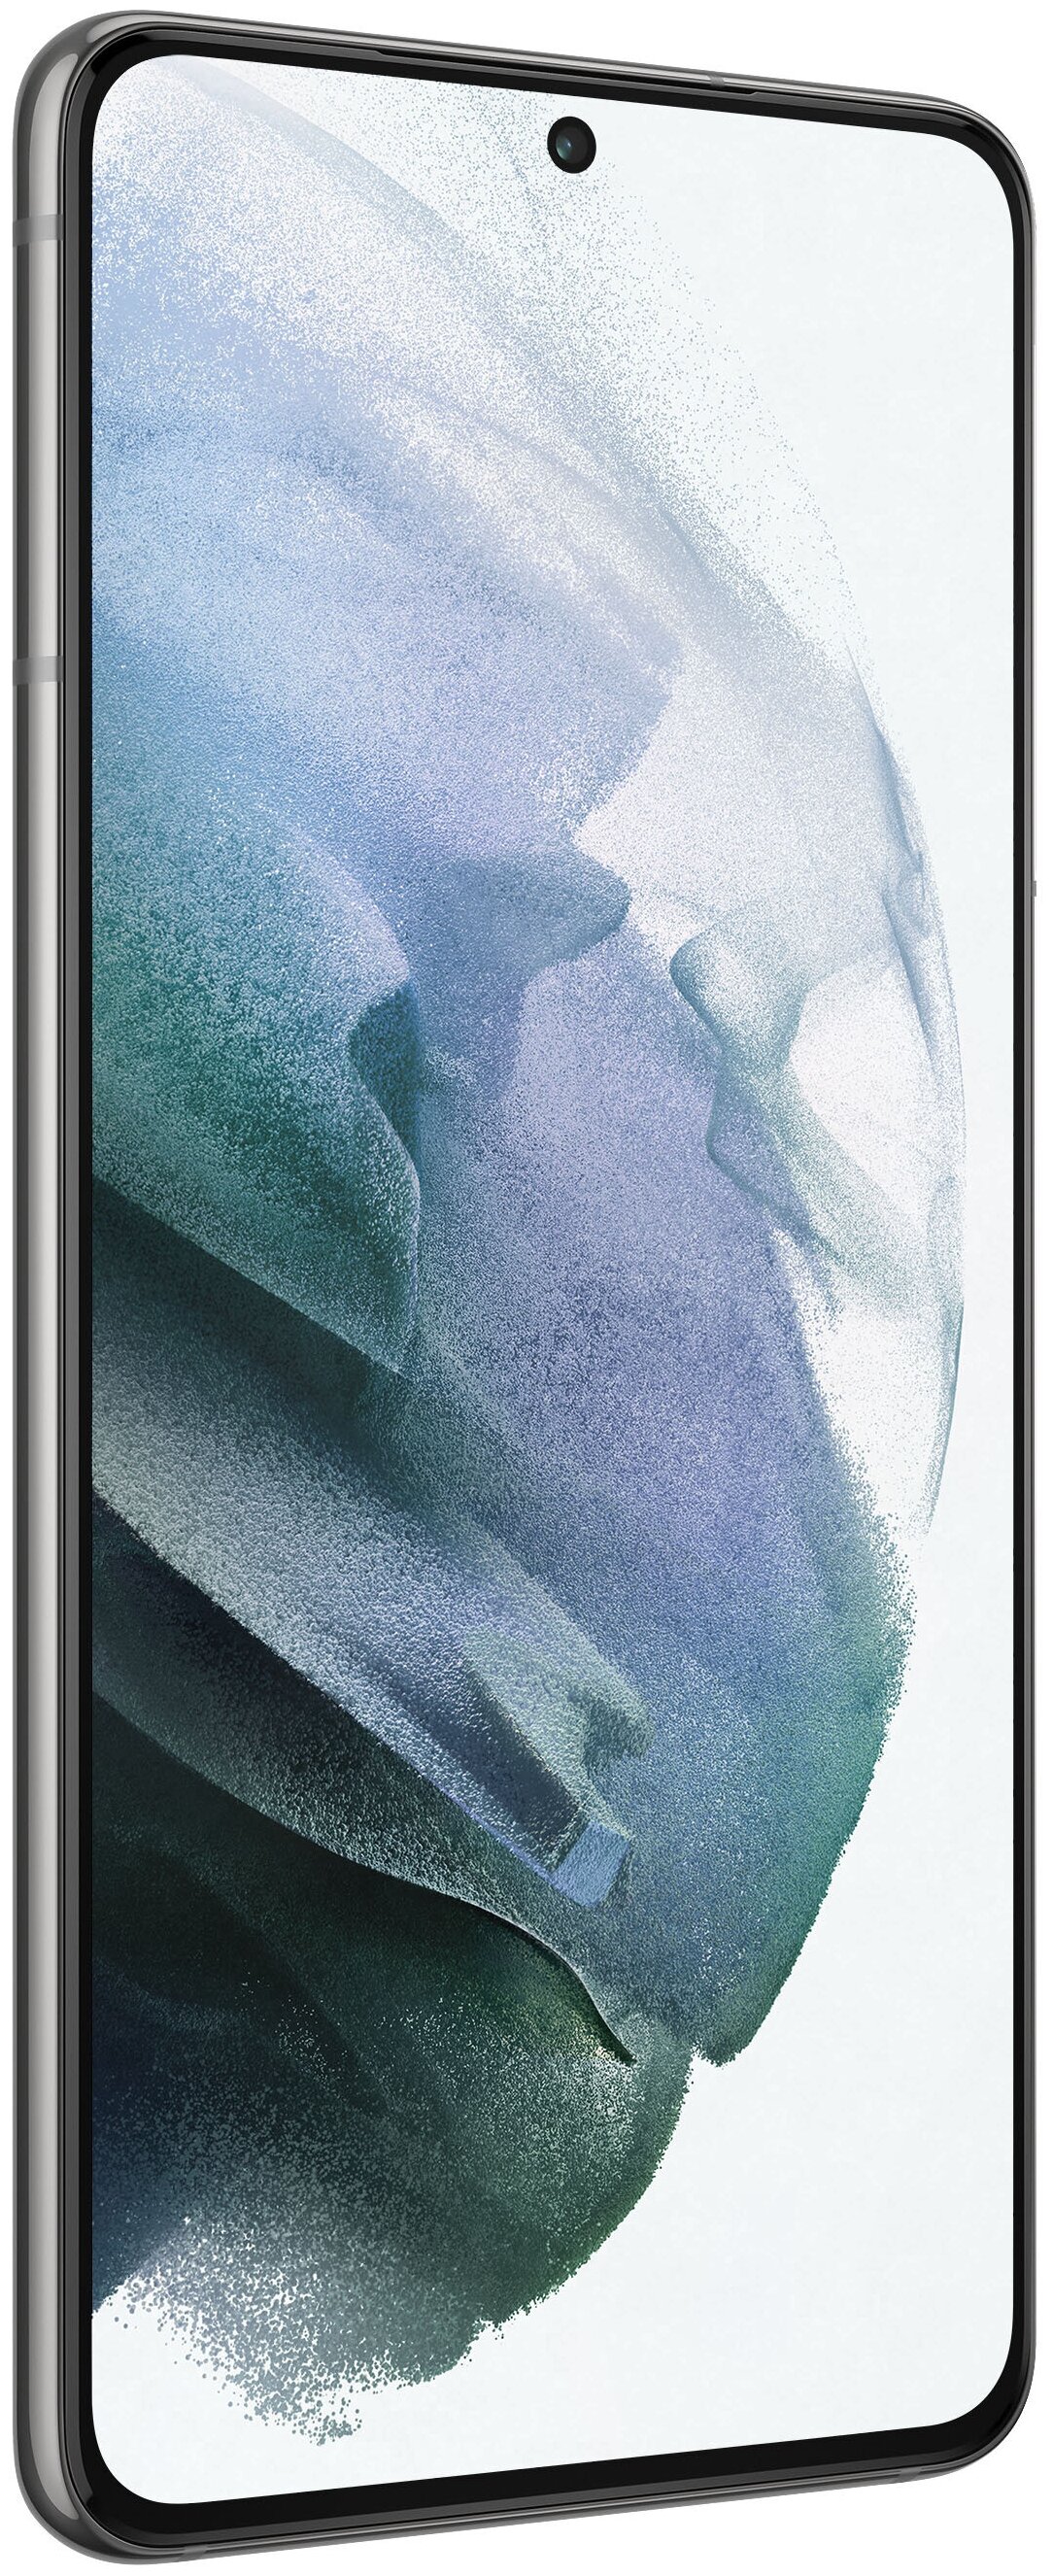 Samsung Galaxy S21 5G (SM-G991B) - аккумулятор: 4000 мА·ч